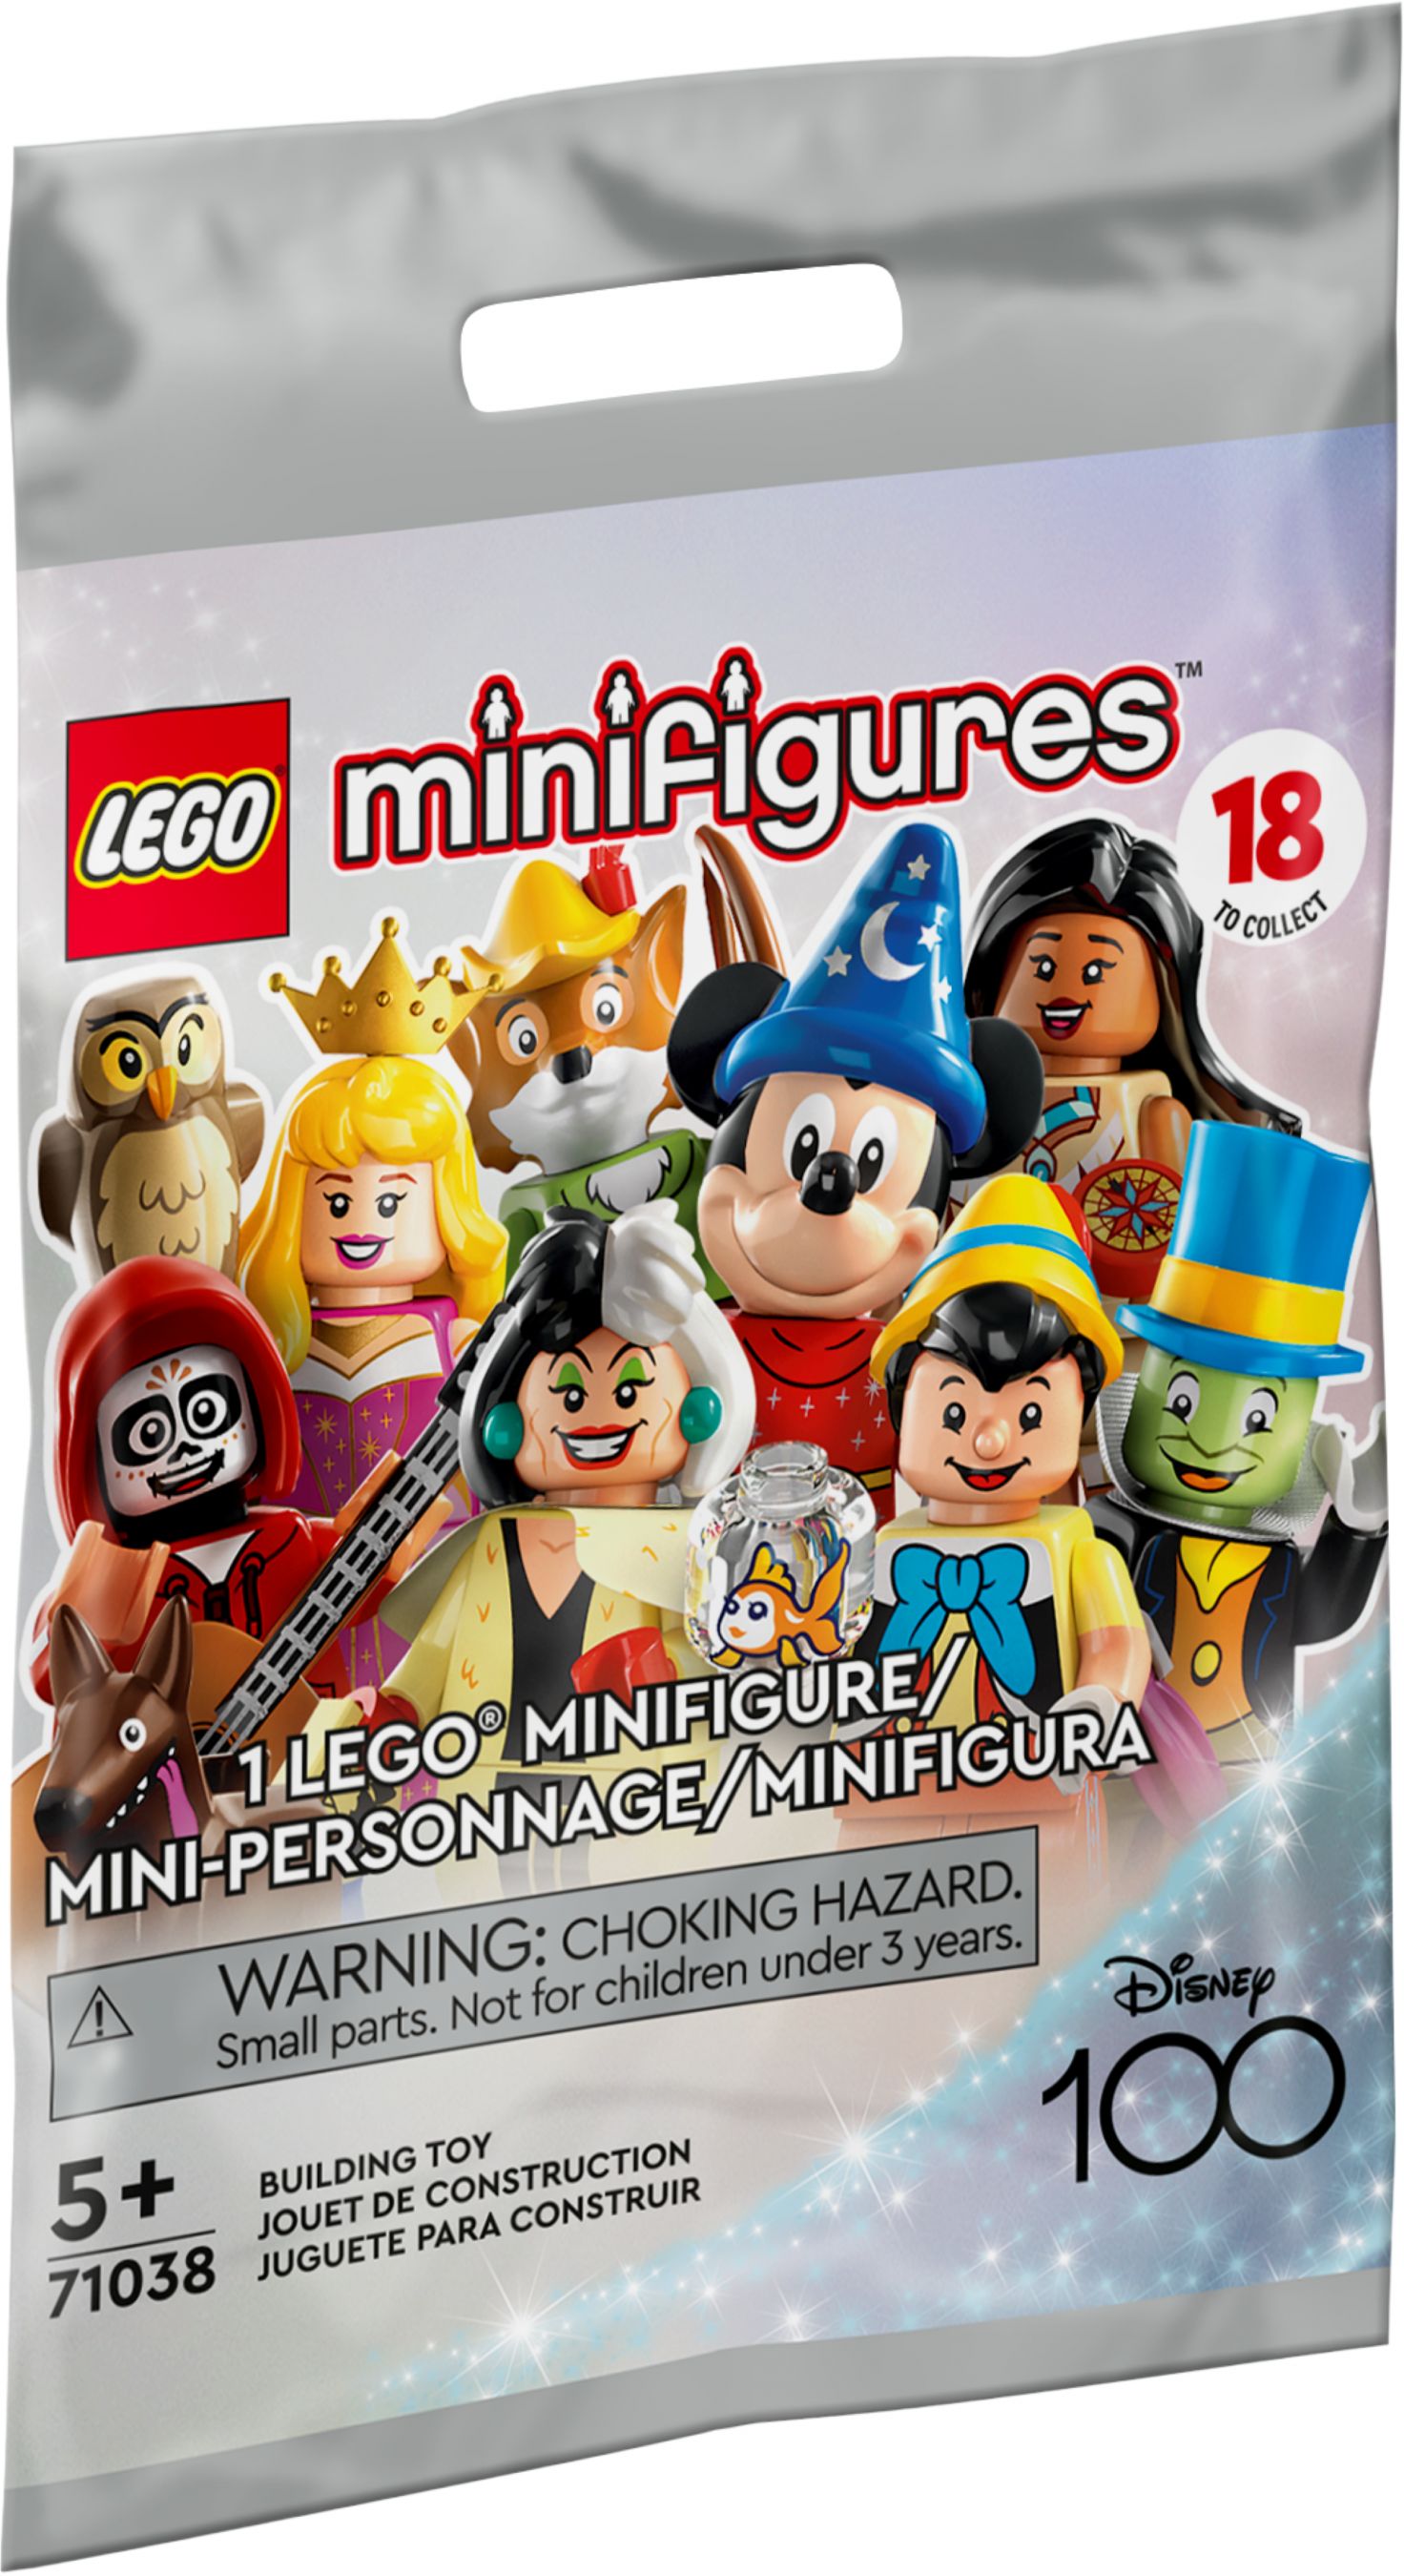 LEGO Collectable Minifigures 71038 Minifiguren Disney 100 - 36er Box LEGO_71038_alt1.jpg